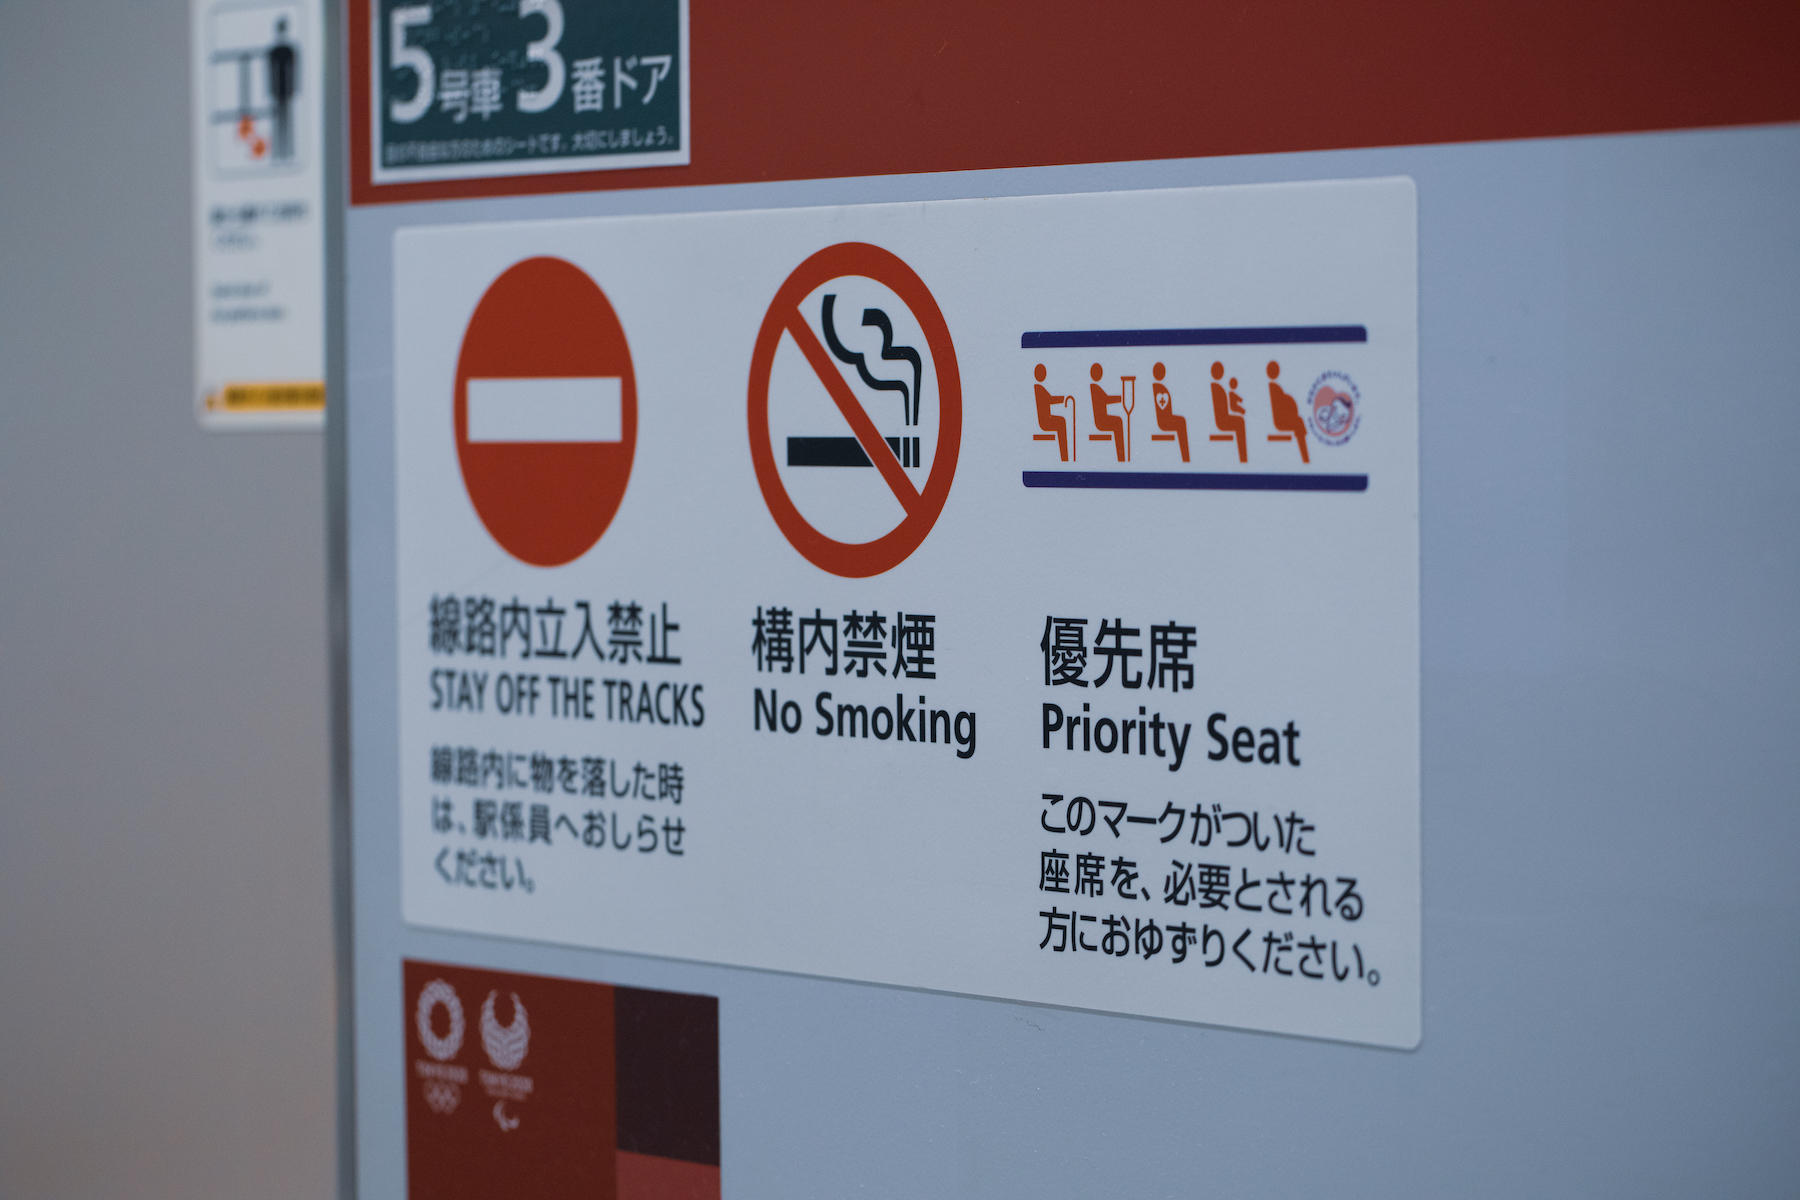 [image] Passenger Conduct